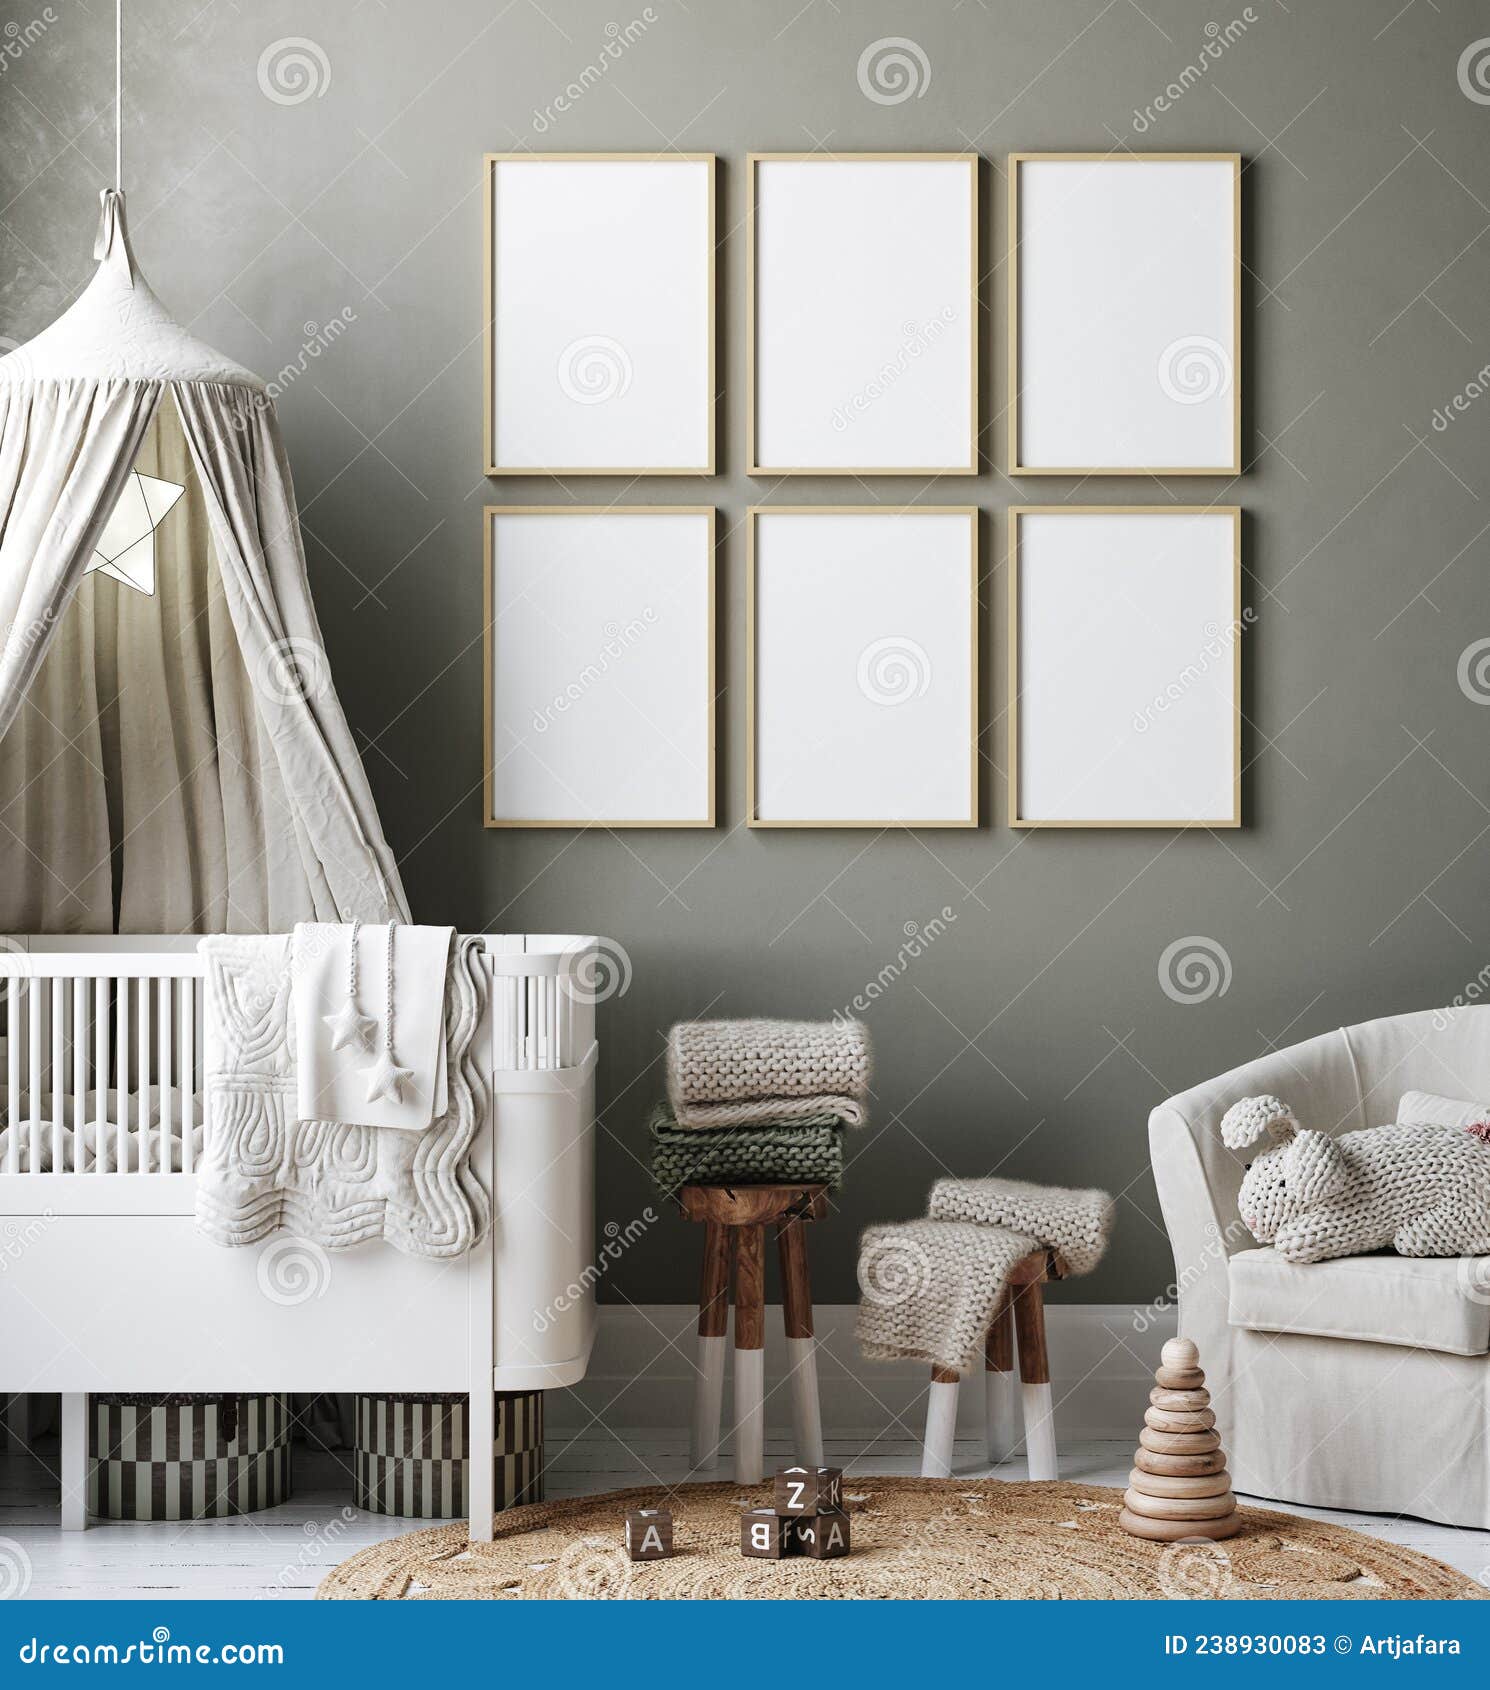 mock up frame in cozy nursery interior background, scandinavian style